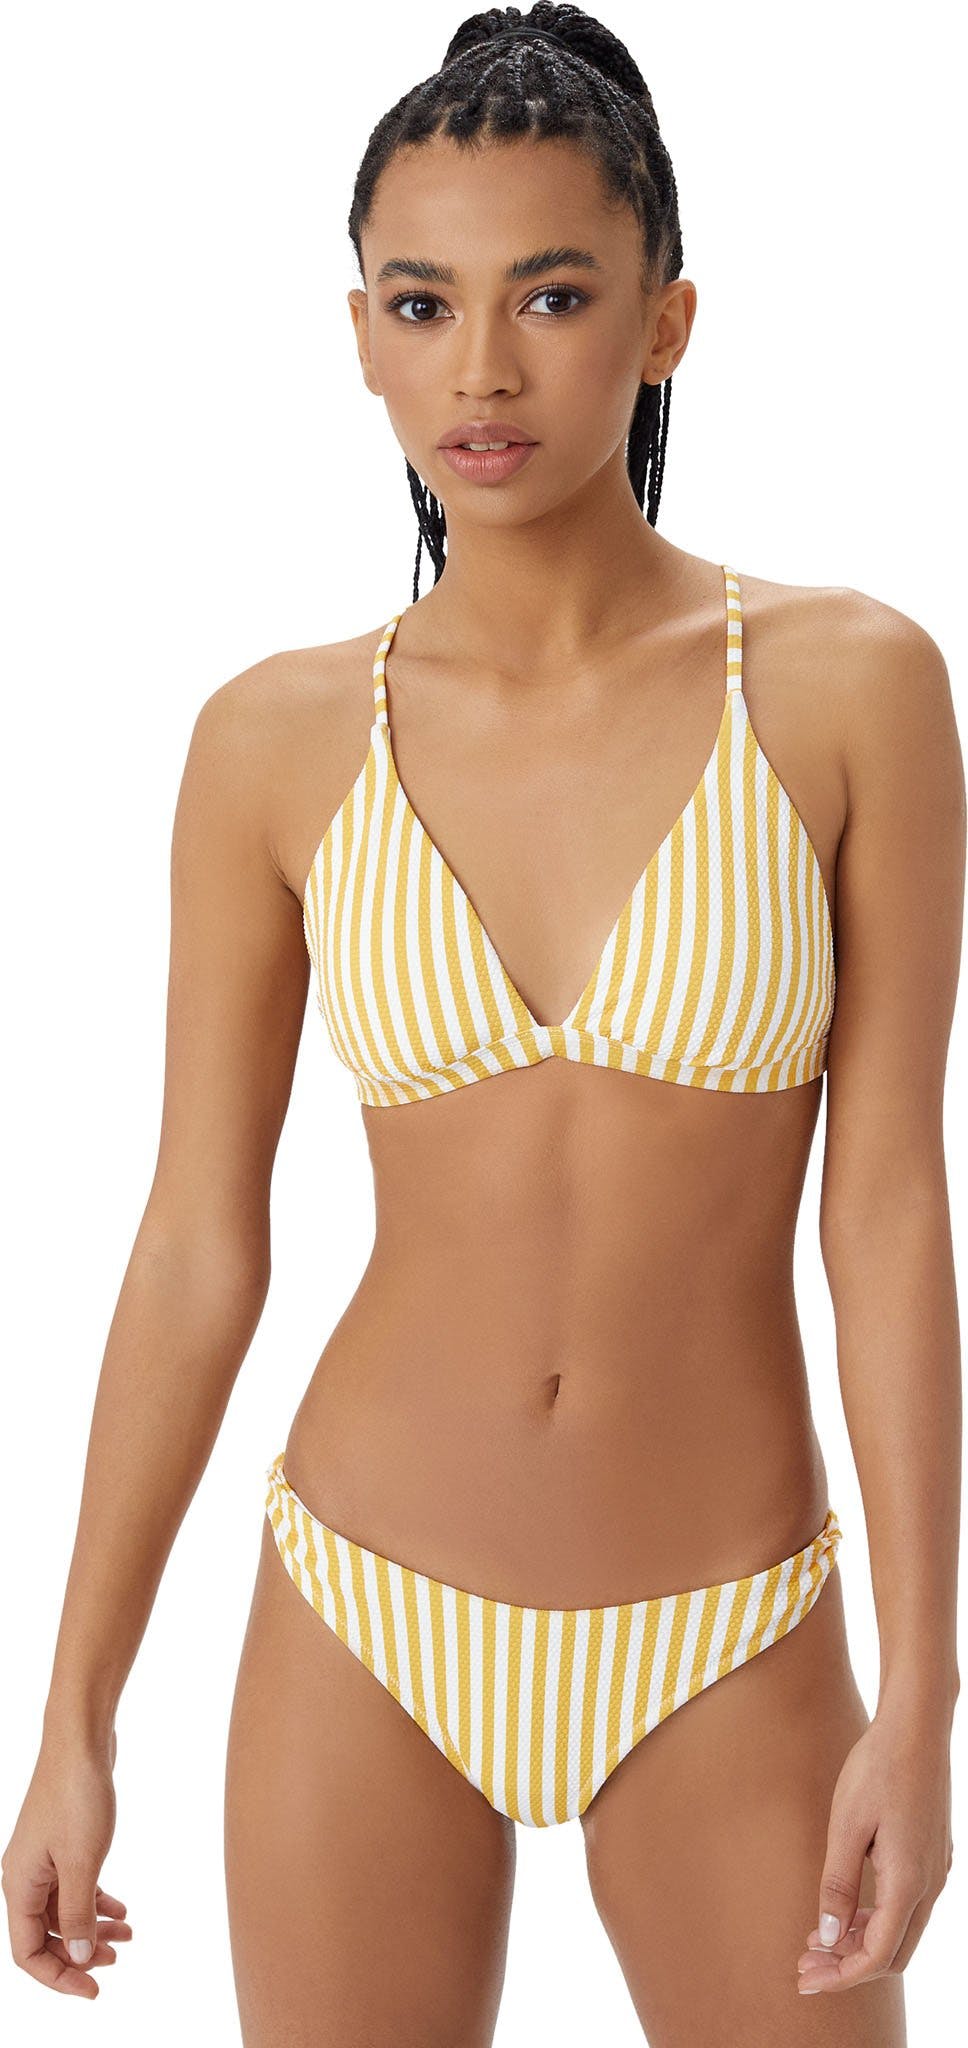 Product image for Tanzania Low Coverage Bikini Bottom - Women's